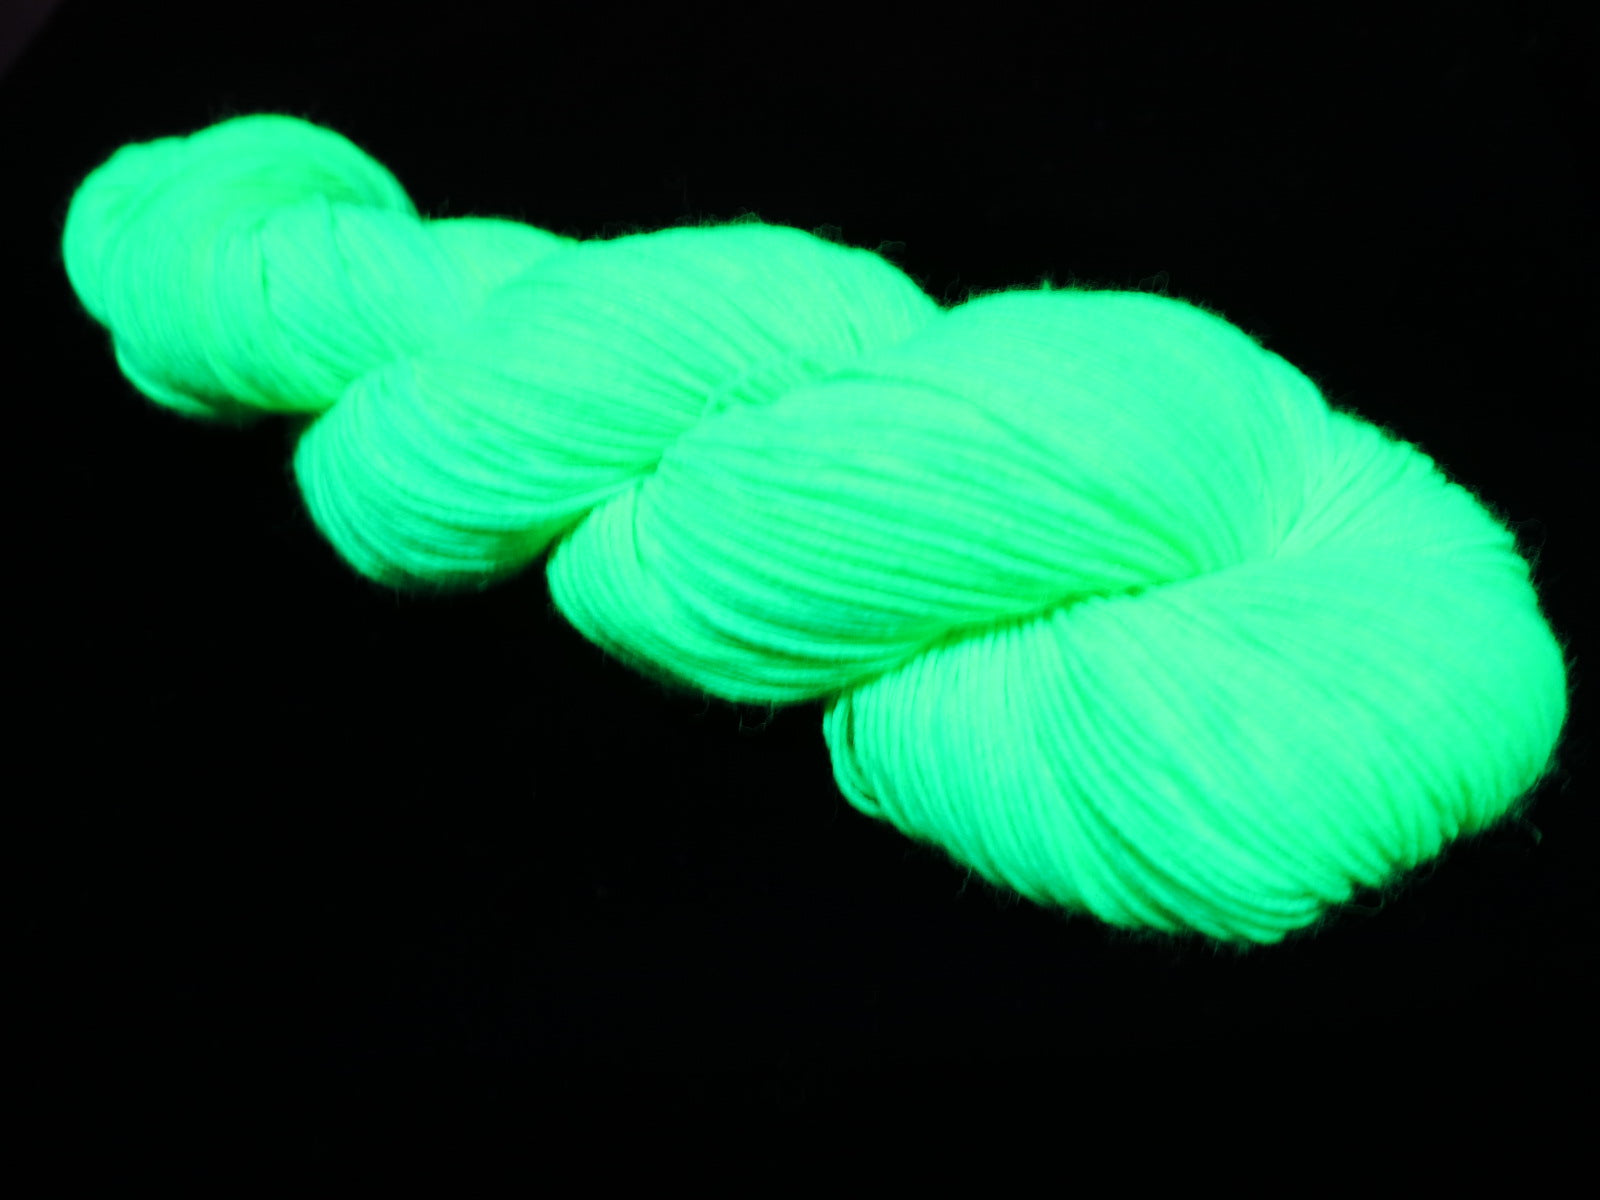 green uv reactive knitting yarn glowing under fluorescent blacklight